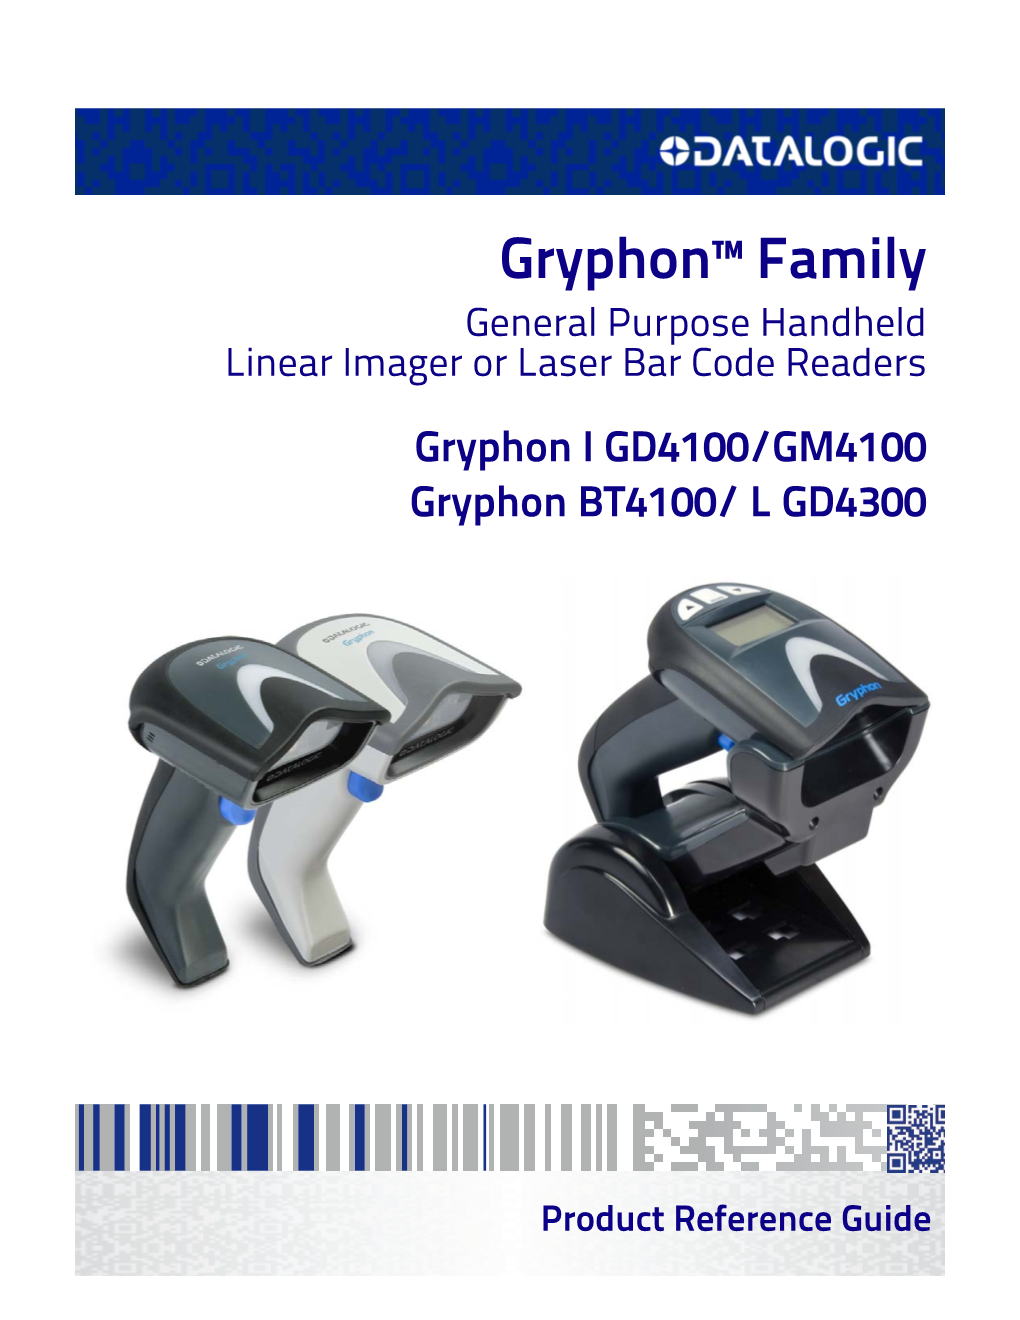 Gryphon™ Family General Purpose Handheld Linear Imager Or Laser Bar Code Readers Gryphon I GD4100/GM4100 Gryphon BT4100/ L GD4300